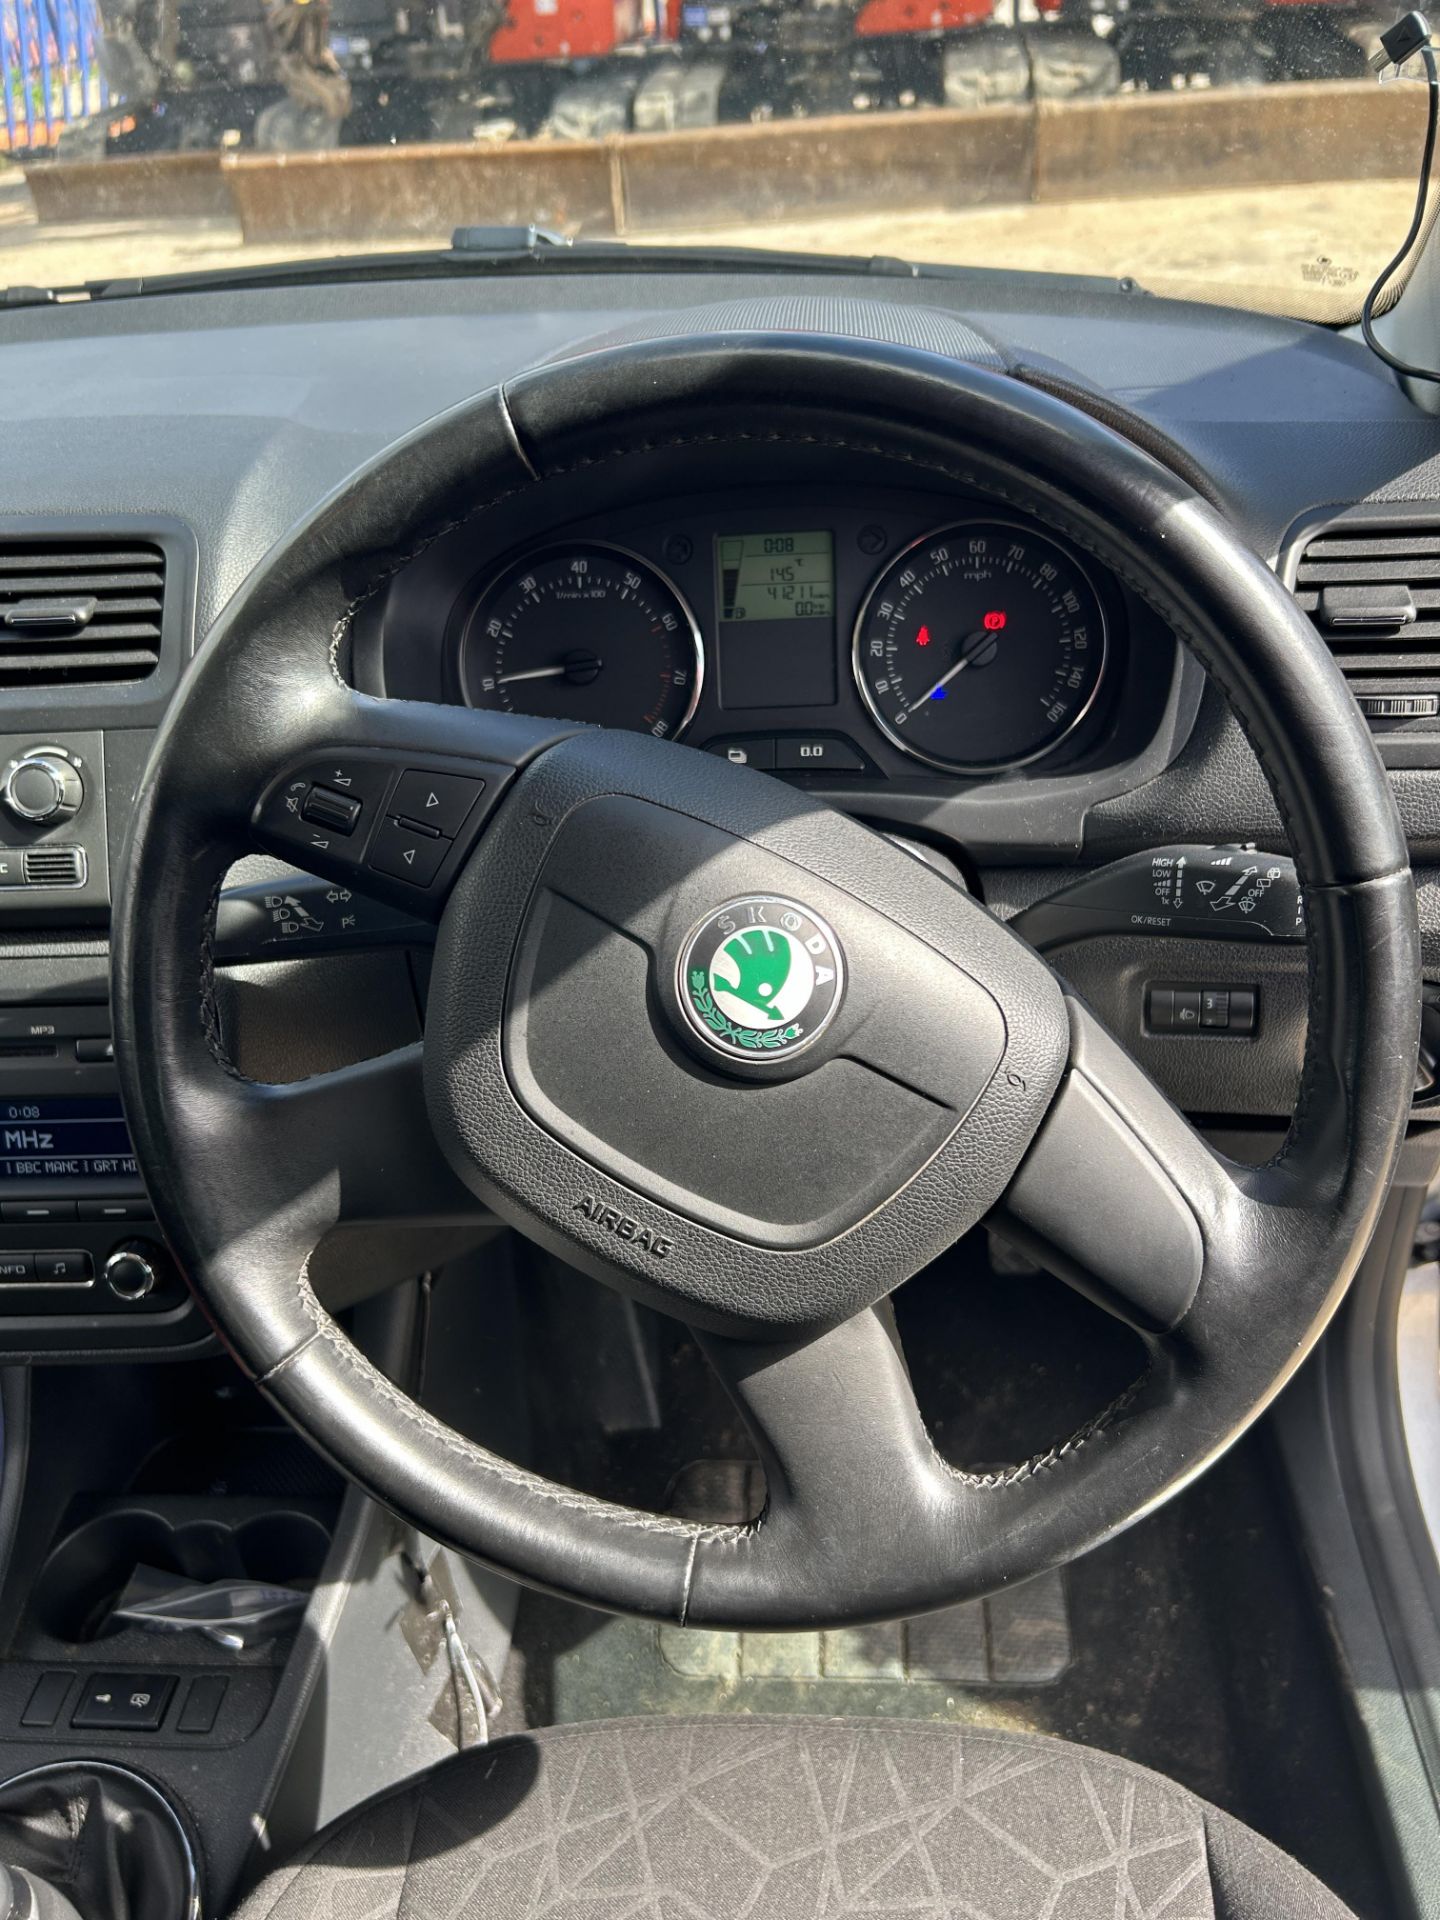 Skoda Fabia SE Plus TSI 85 Petrol 5 Door Hatchback | FT61 RLU | 41,211 Miles - Image 11 of 12